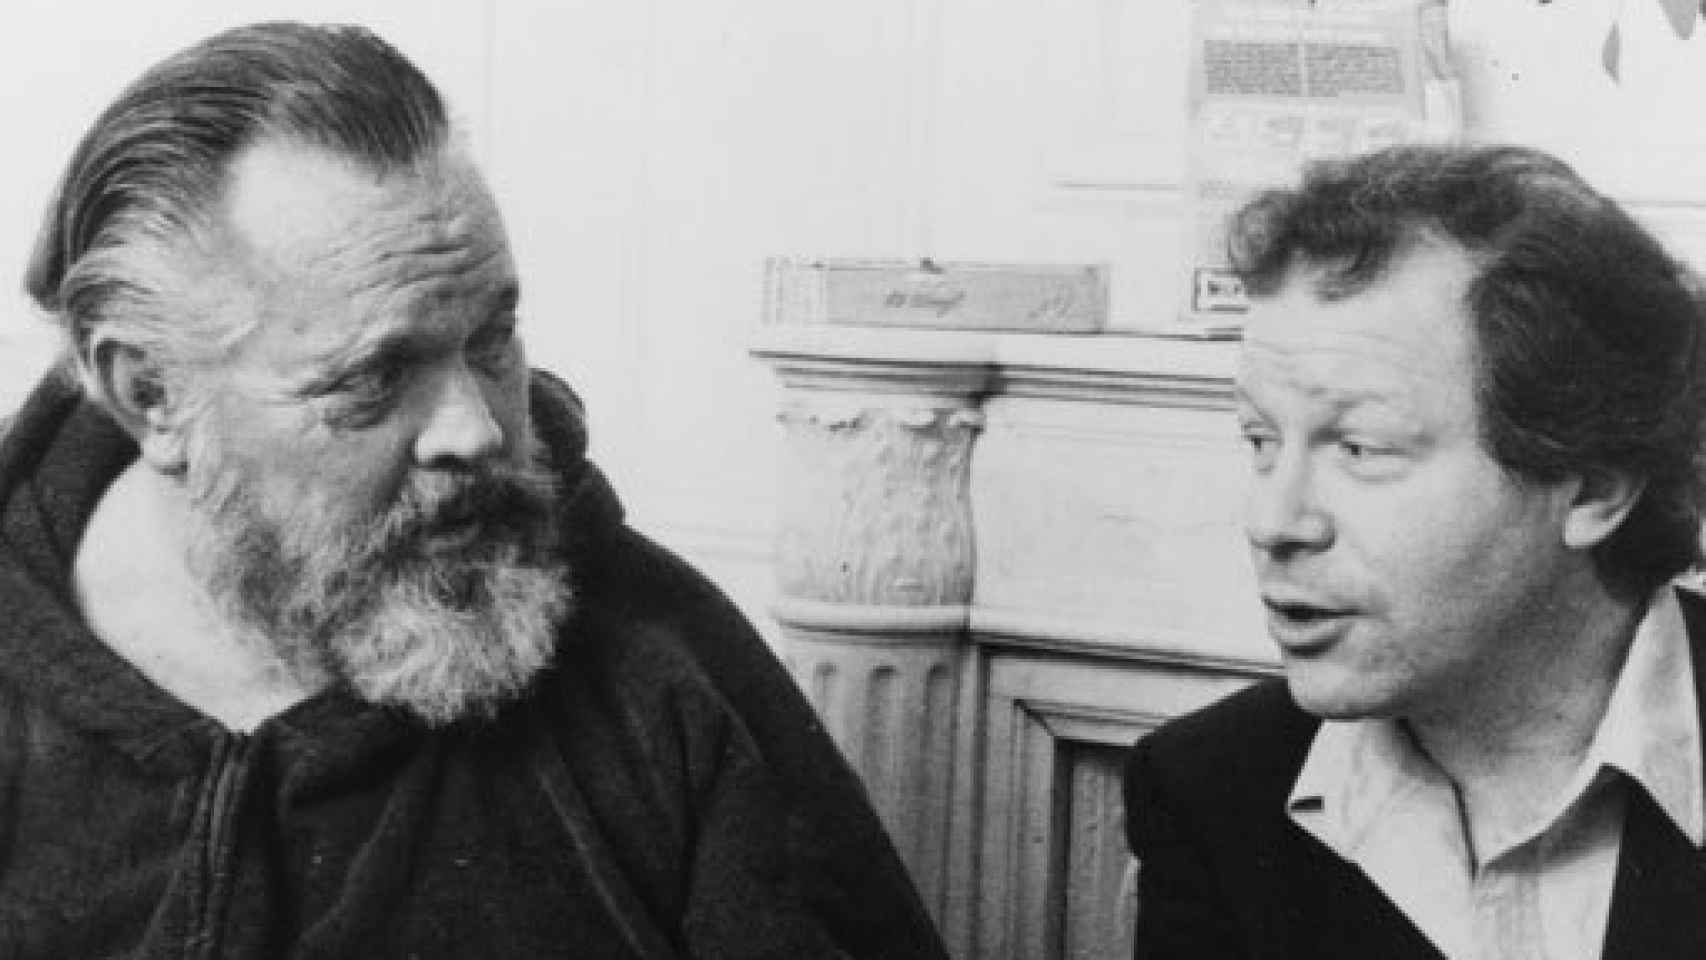 Image: Mis almuerzos con Orson Welles